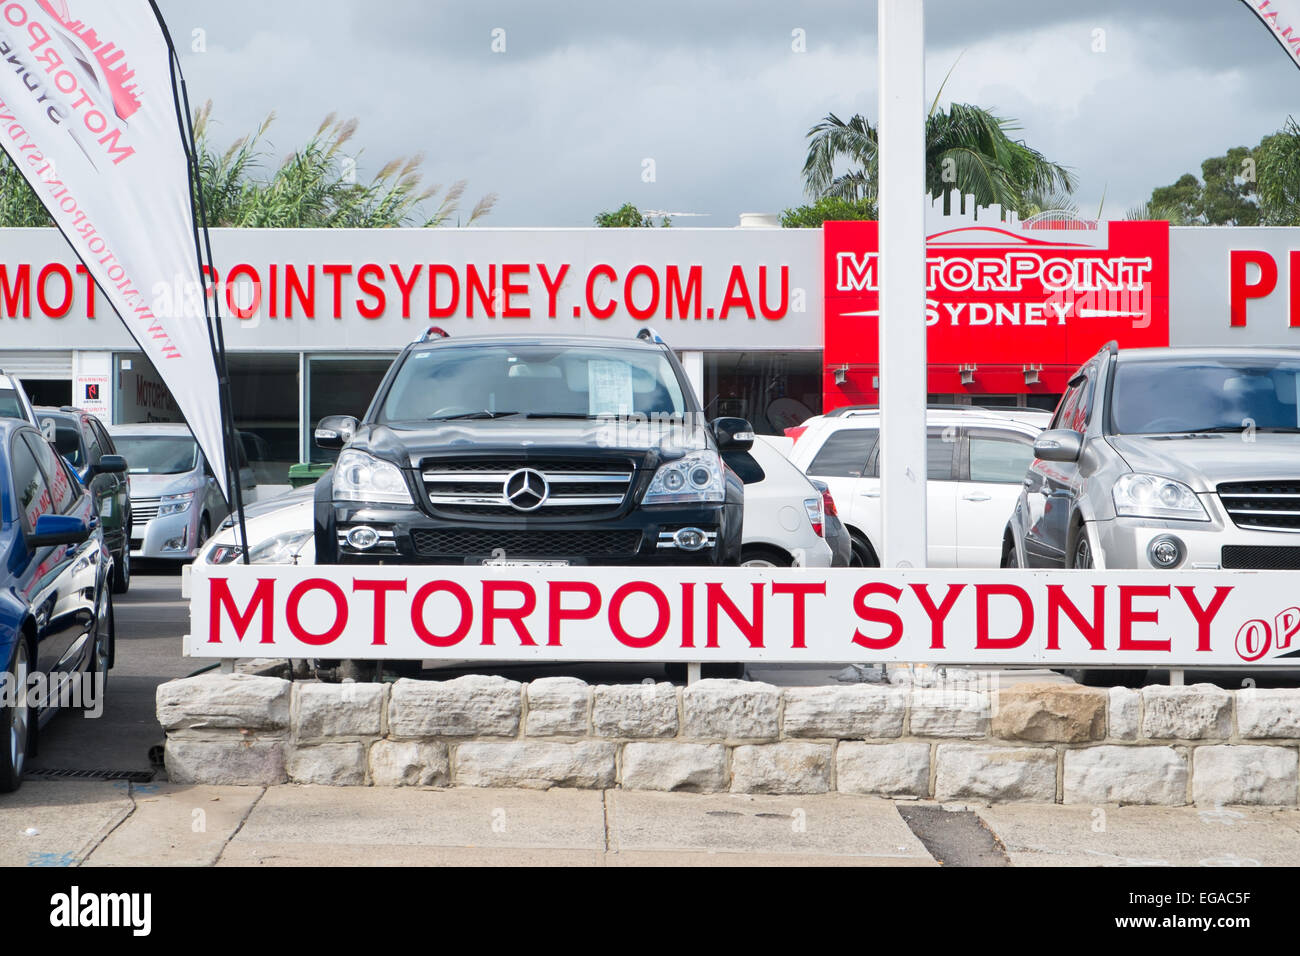 Motorpoint sydney a used car dealership located on Parraatta  road in western sydney,australia Stock Photo